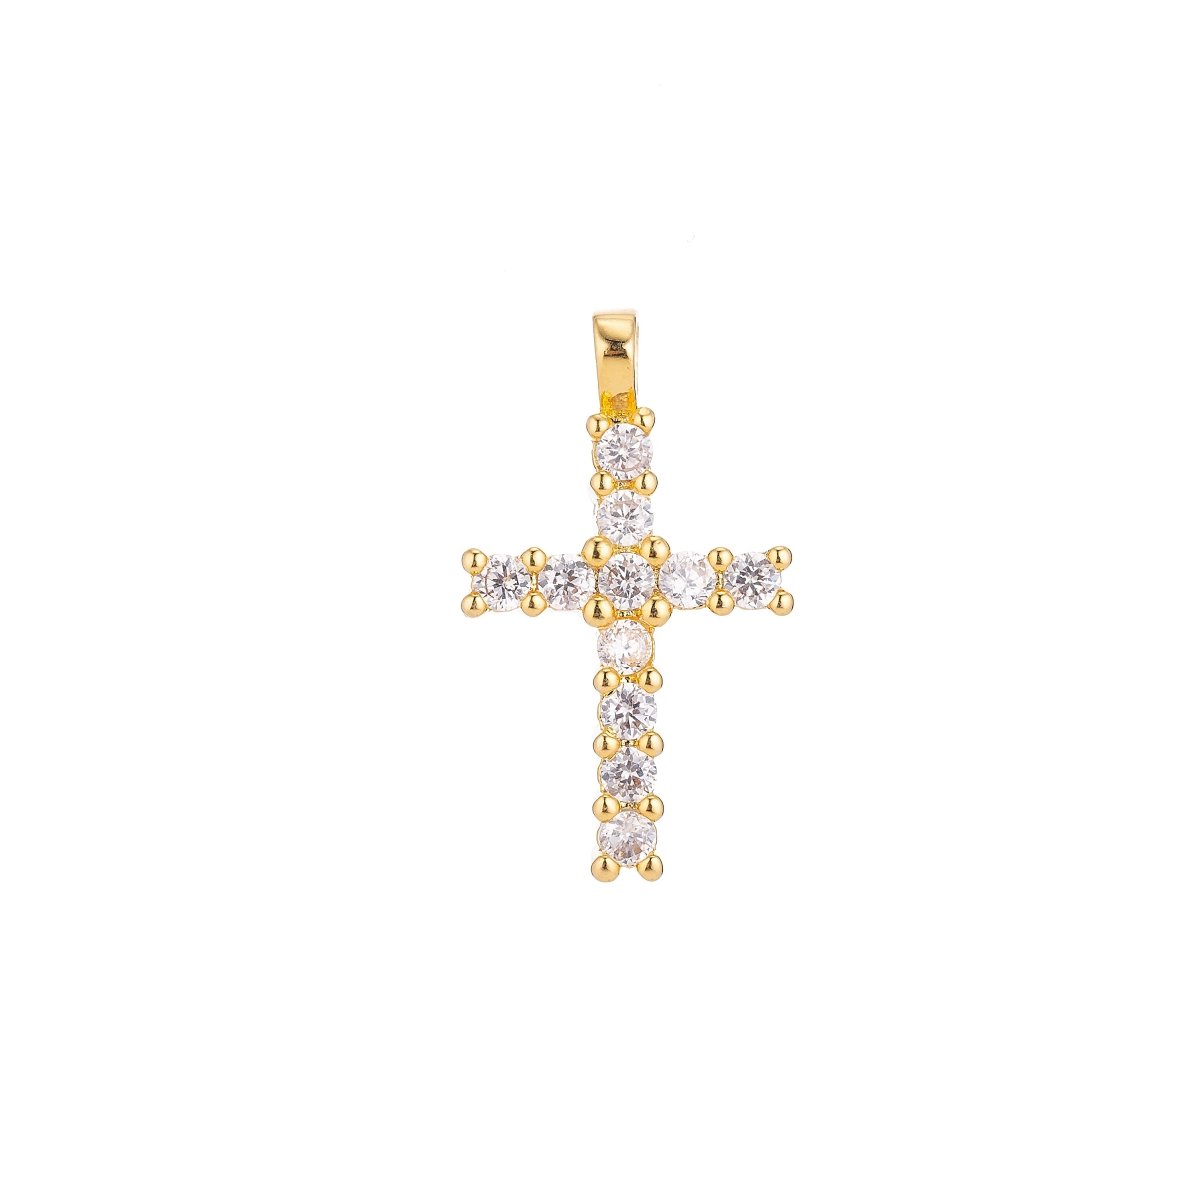 18k Gold Filled Dainty Delicate Cross Jesus Cubic Zirconia Necklace Pendant Bracelet Earring Charm Bails for Jewelry Making H-230 - DLUXCA